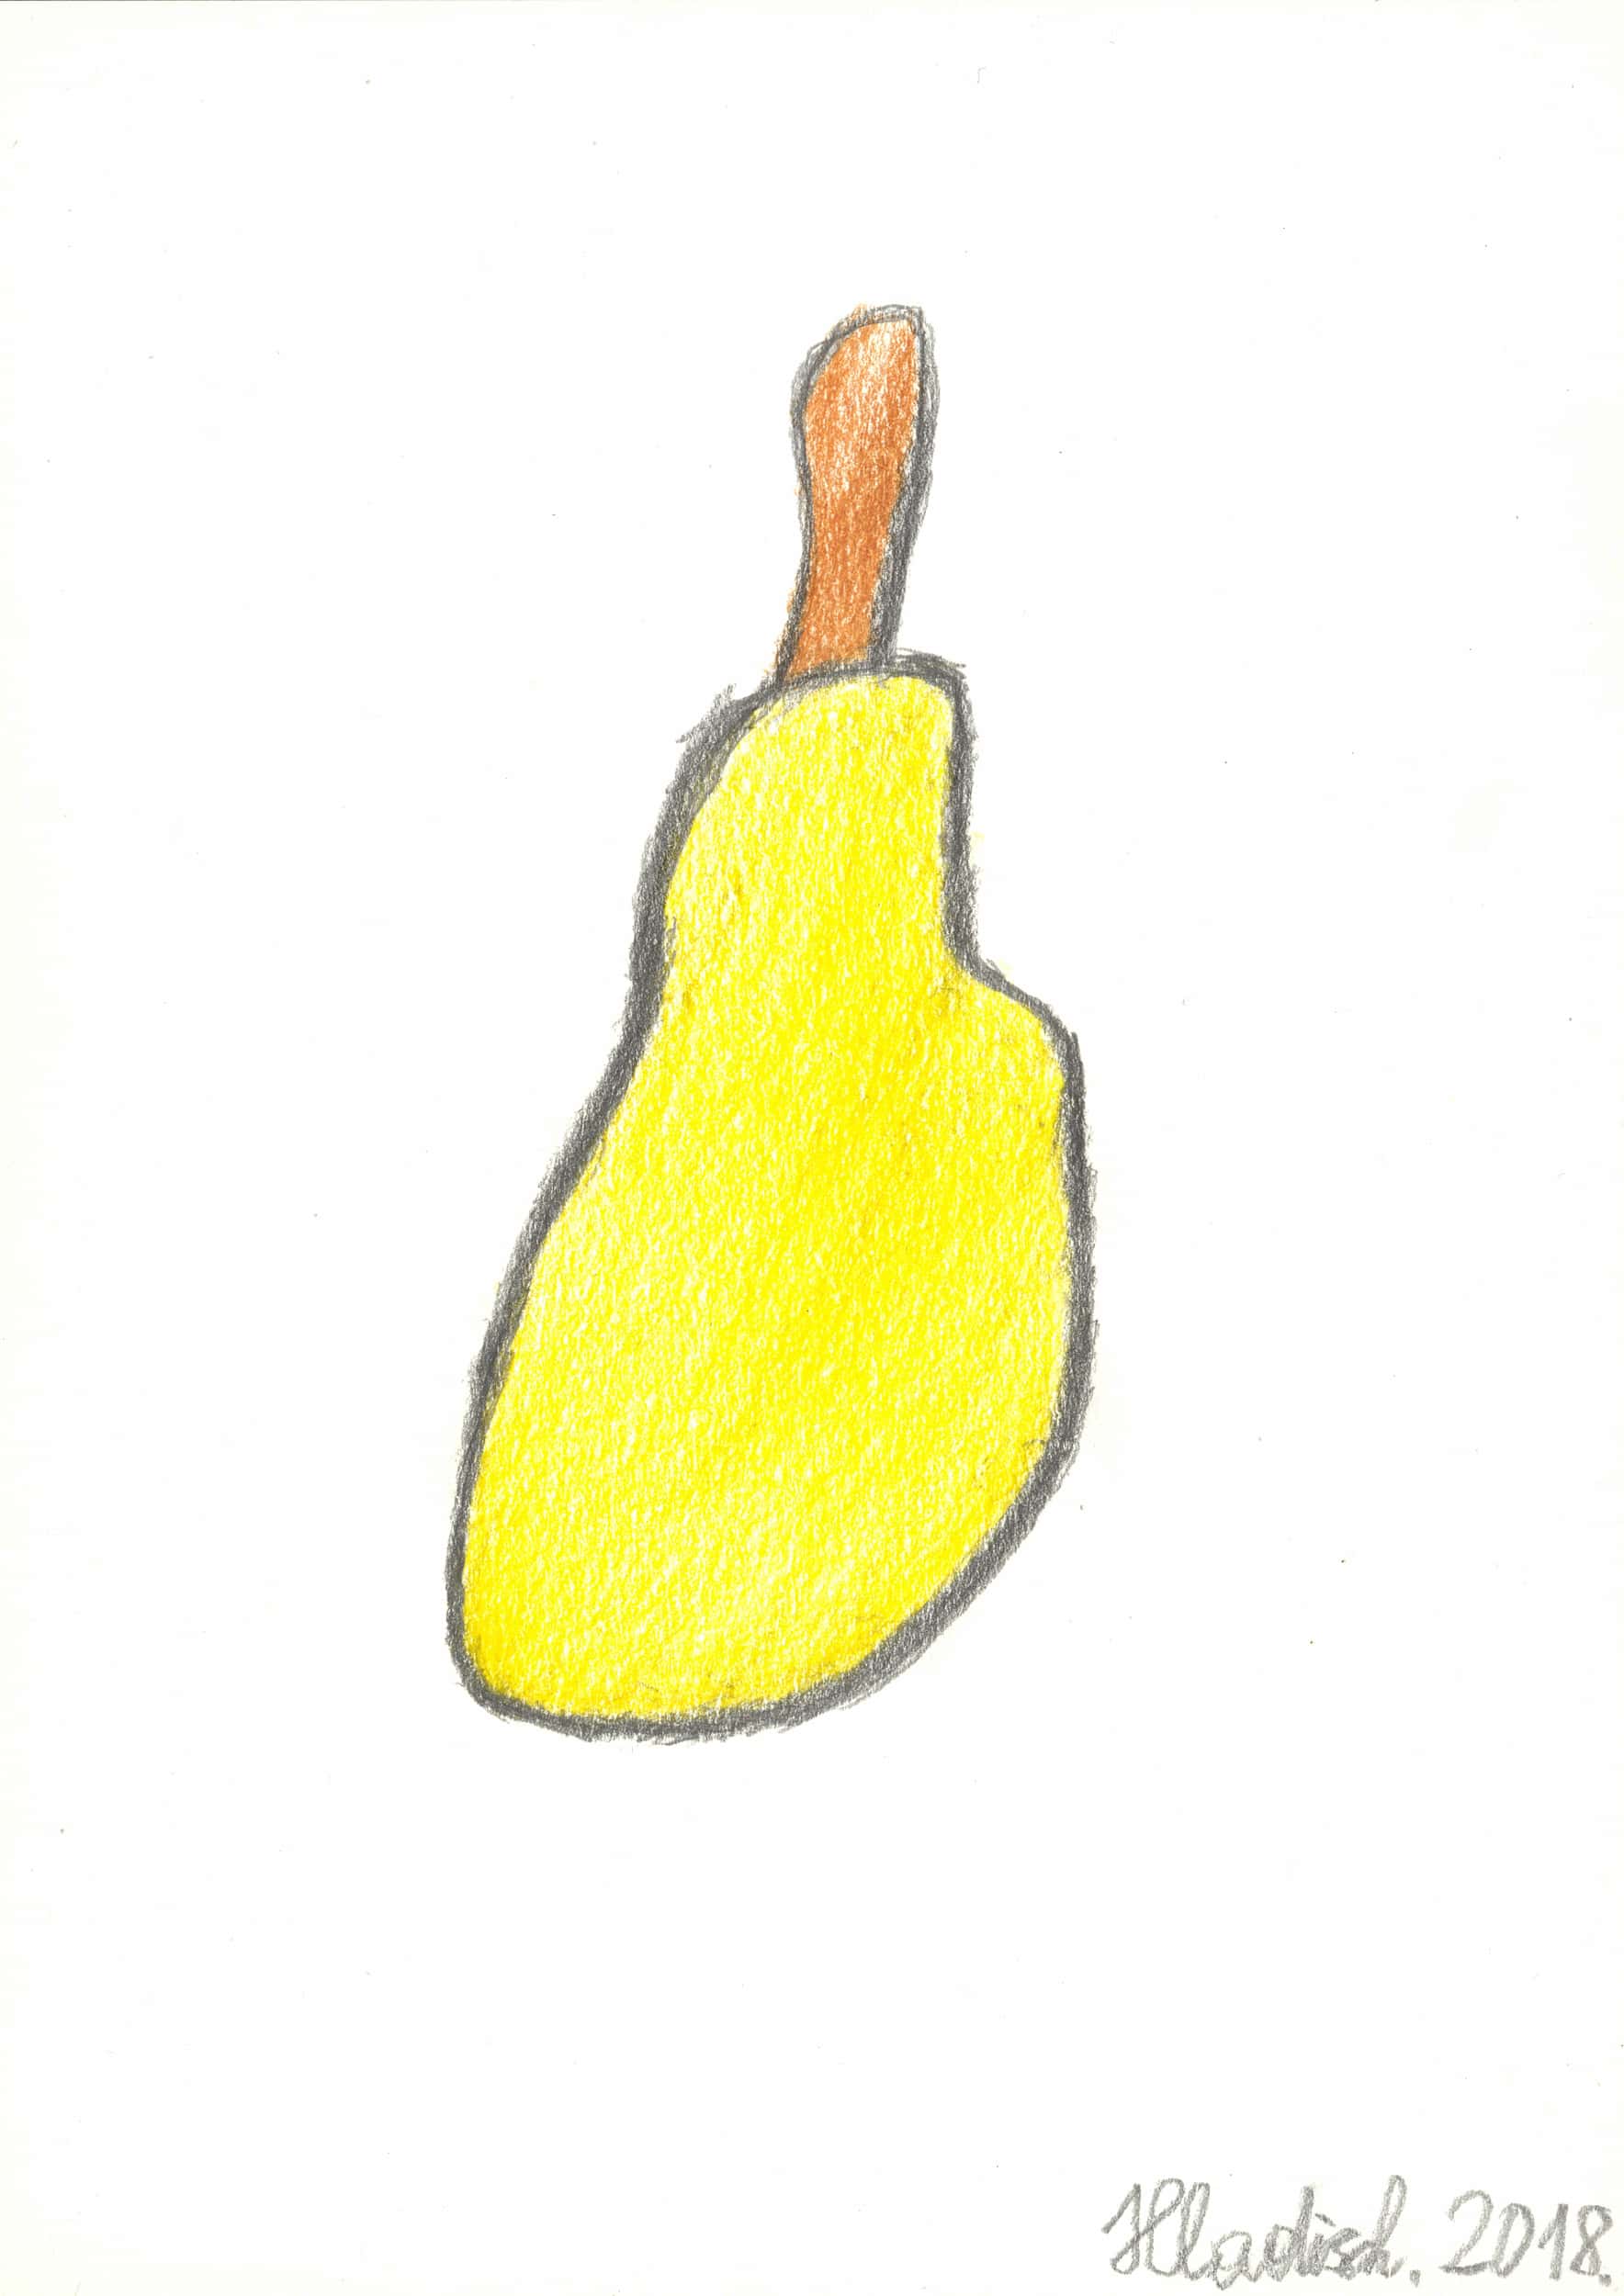 hladisch helmut - Birne / Pear